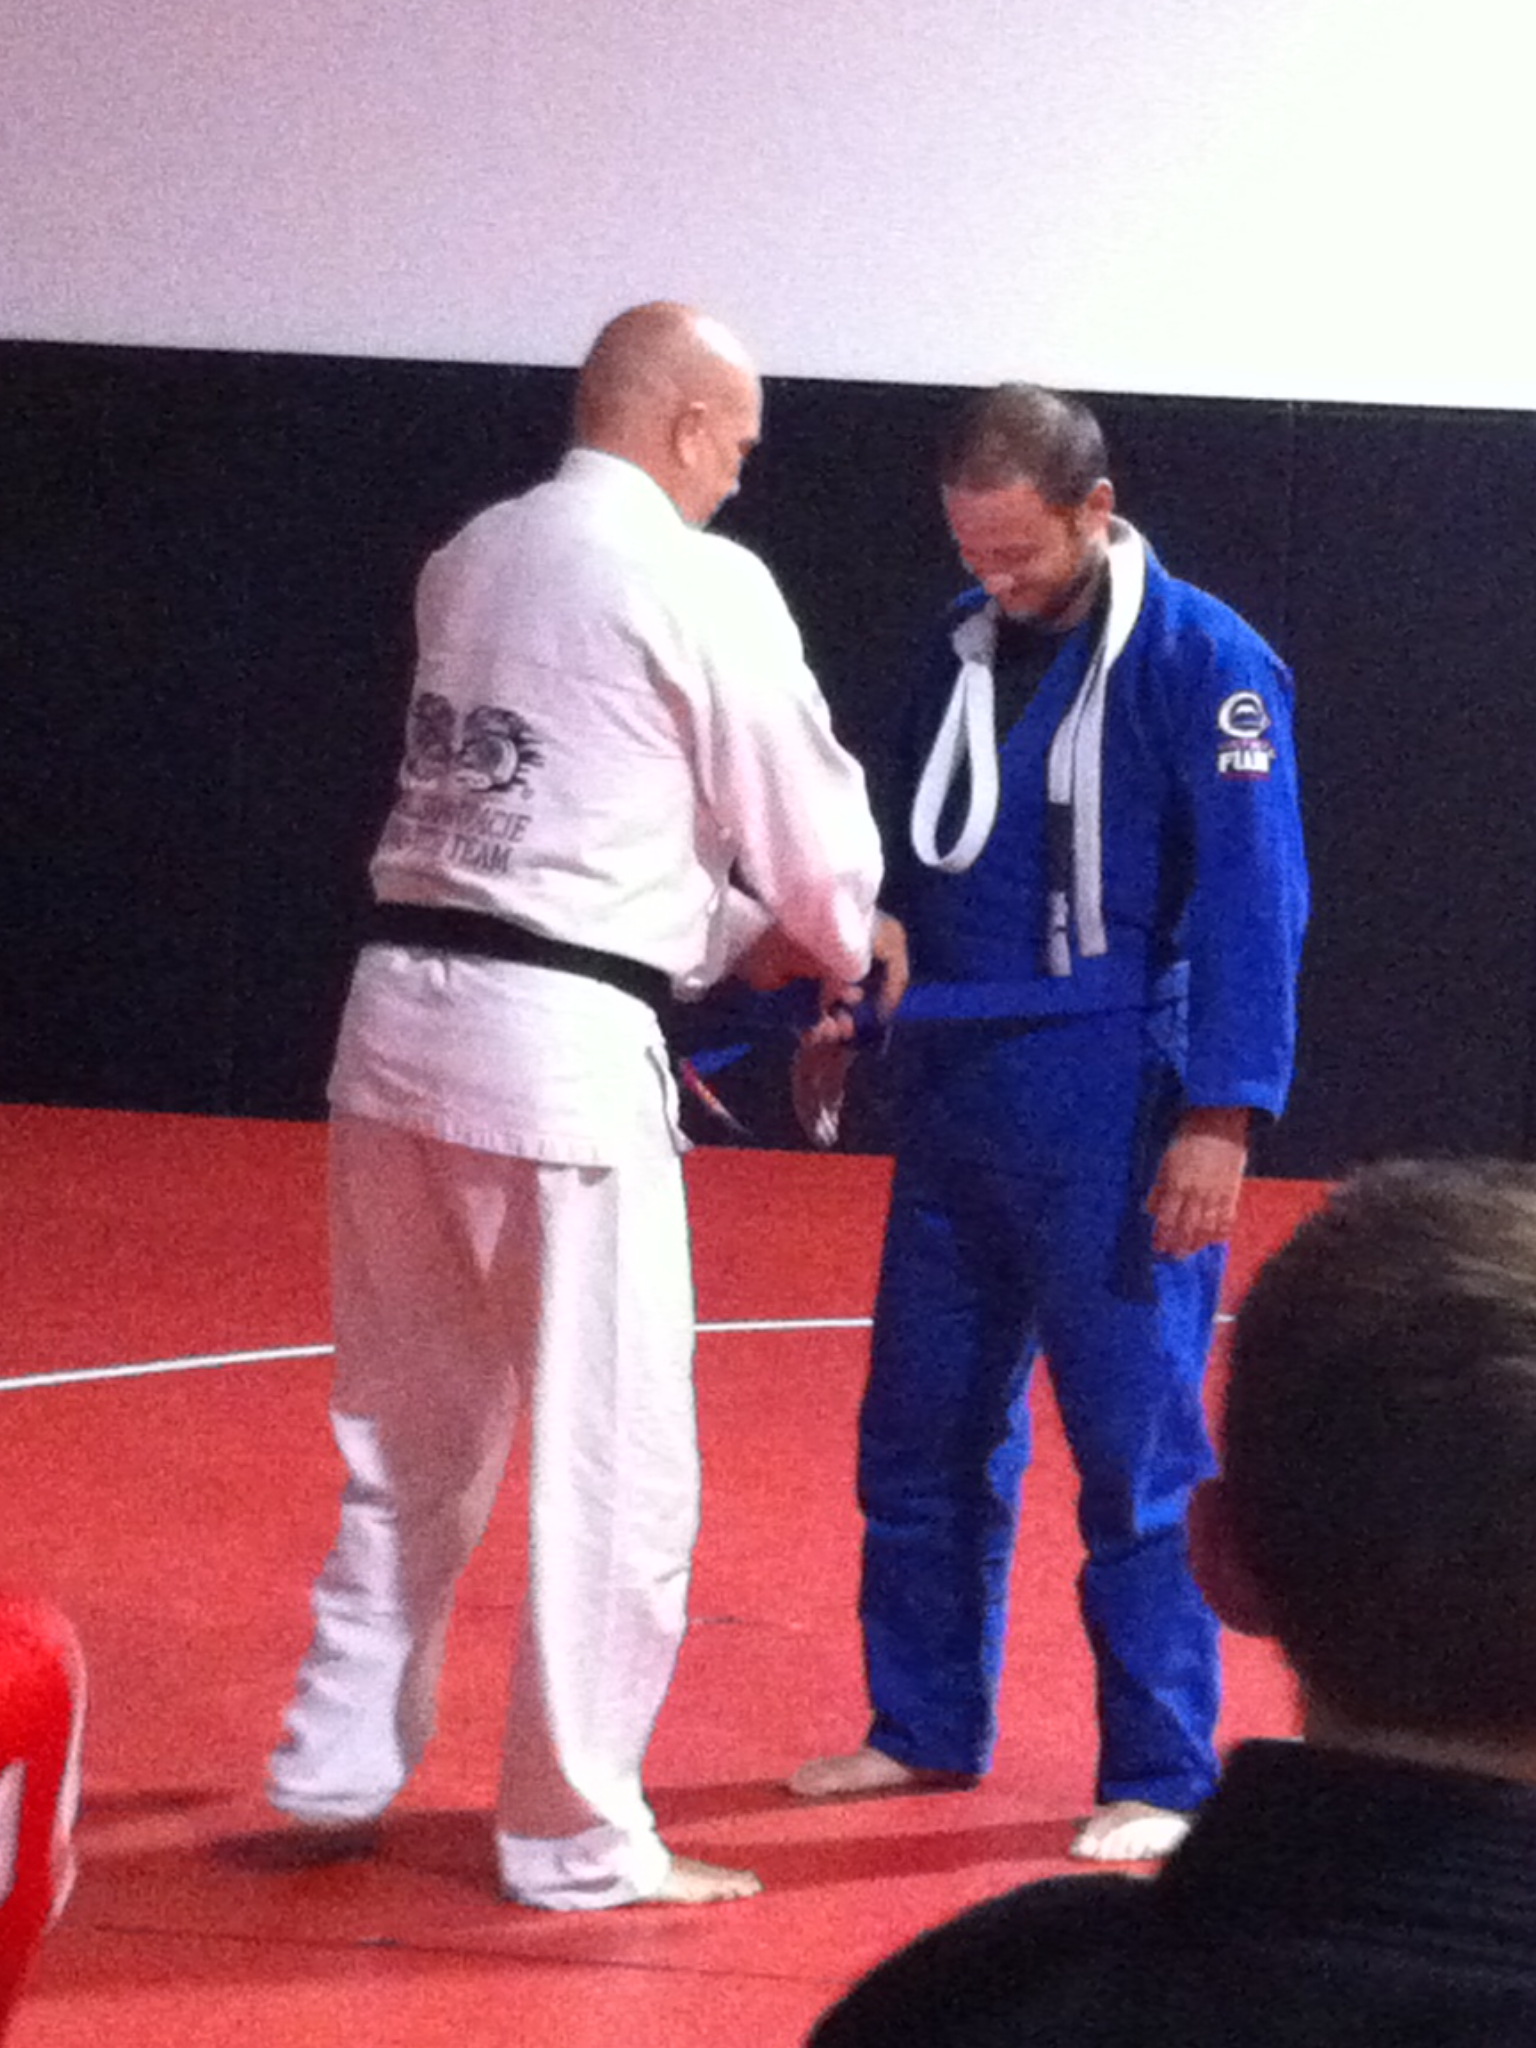 Morris earns belt in Brazilian jiujitsu